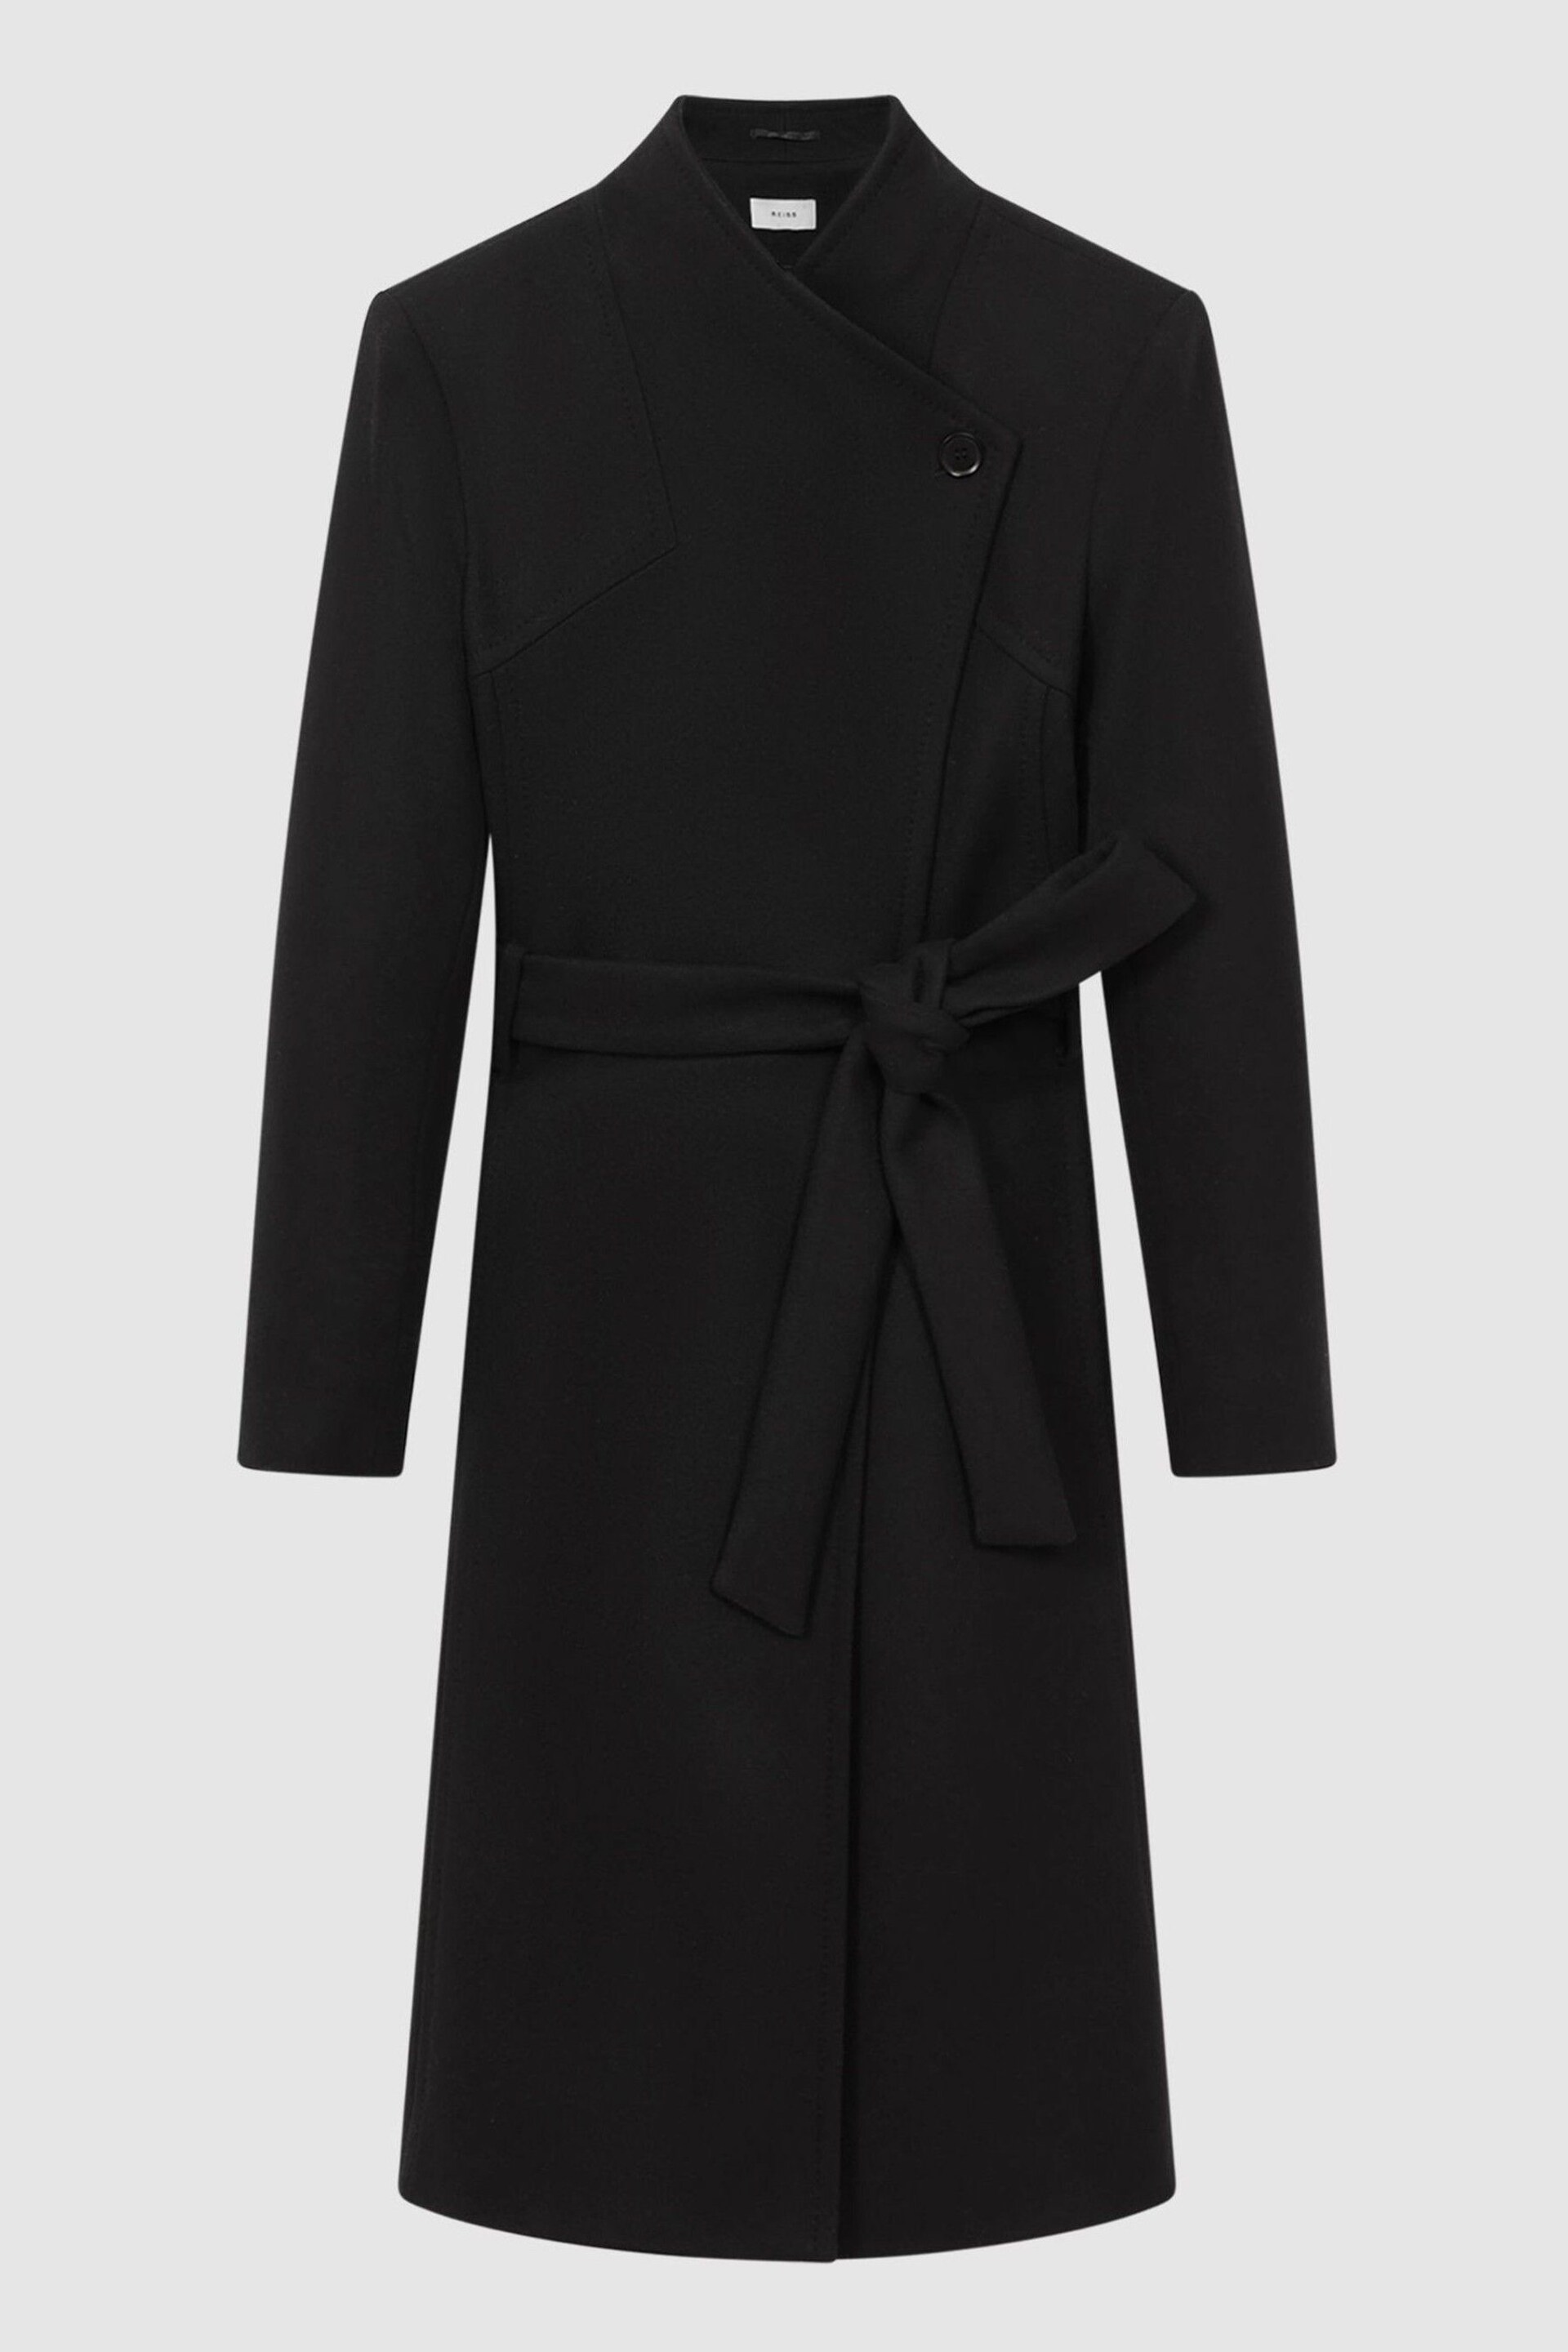 Reiss Black Freja Tailored Wool Blend Longline Coat - Image 2 of 6